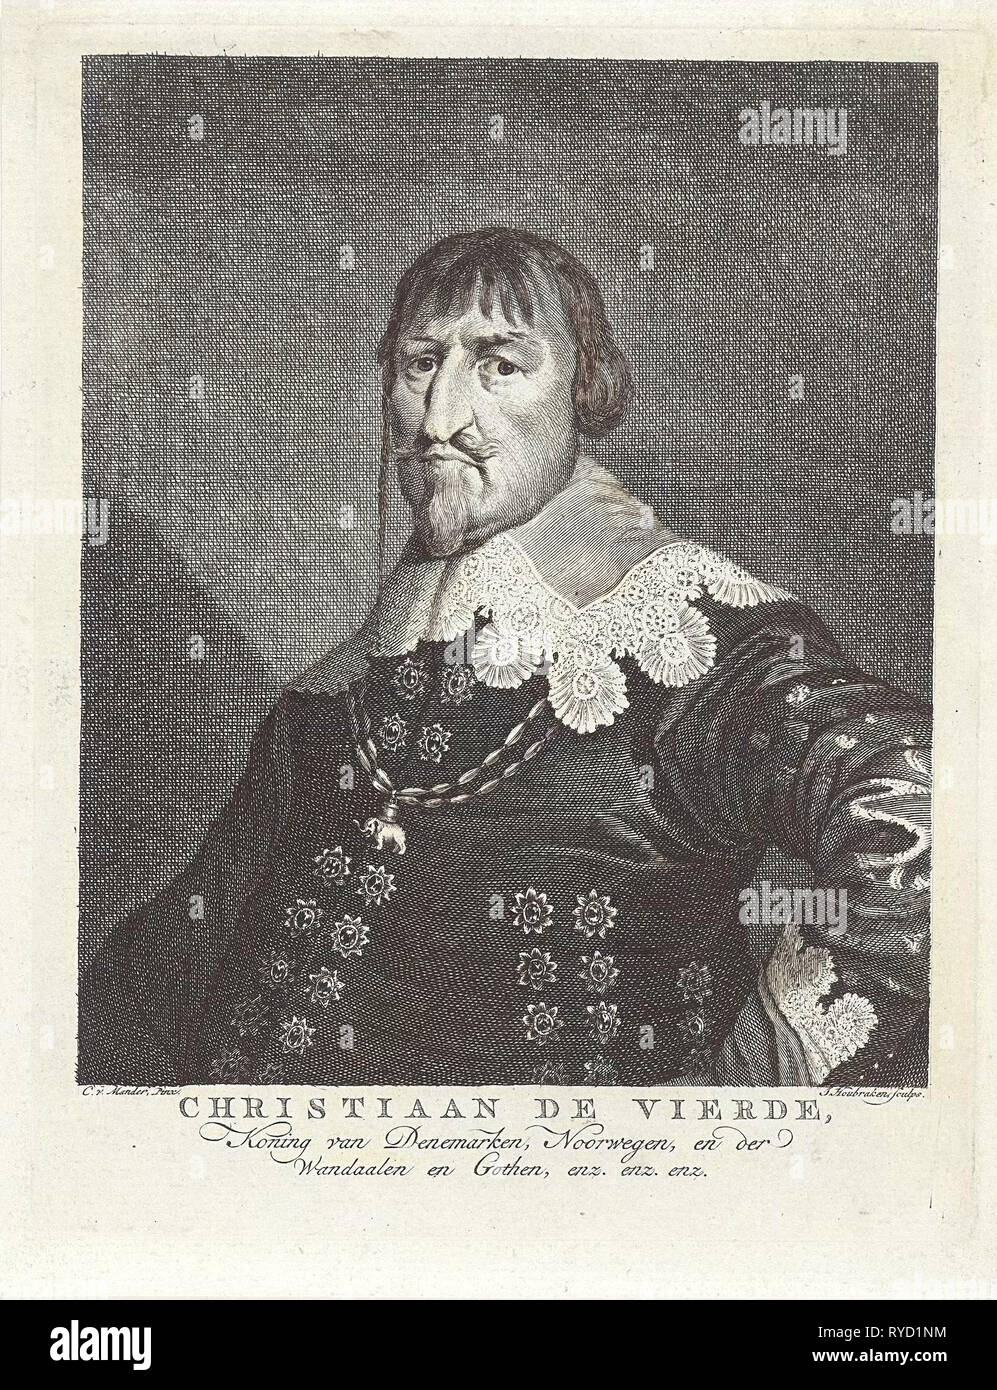 Porträt von König Christian IV. von Dänemark, Jakob Houbraken, 1708-1780 Stockfoto